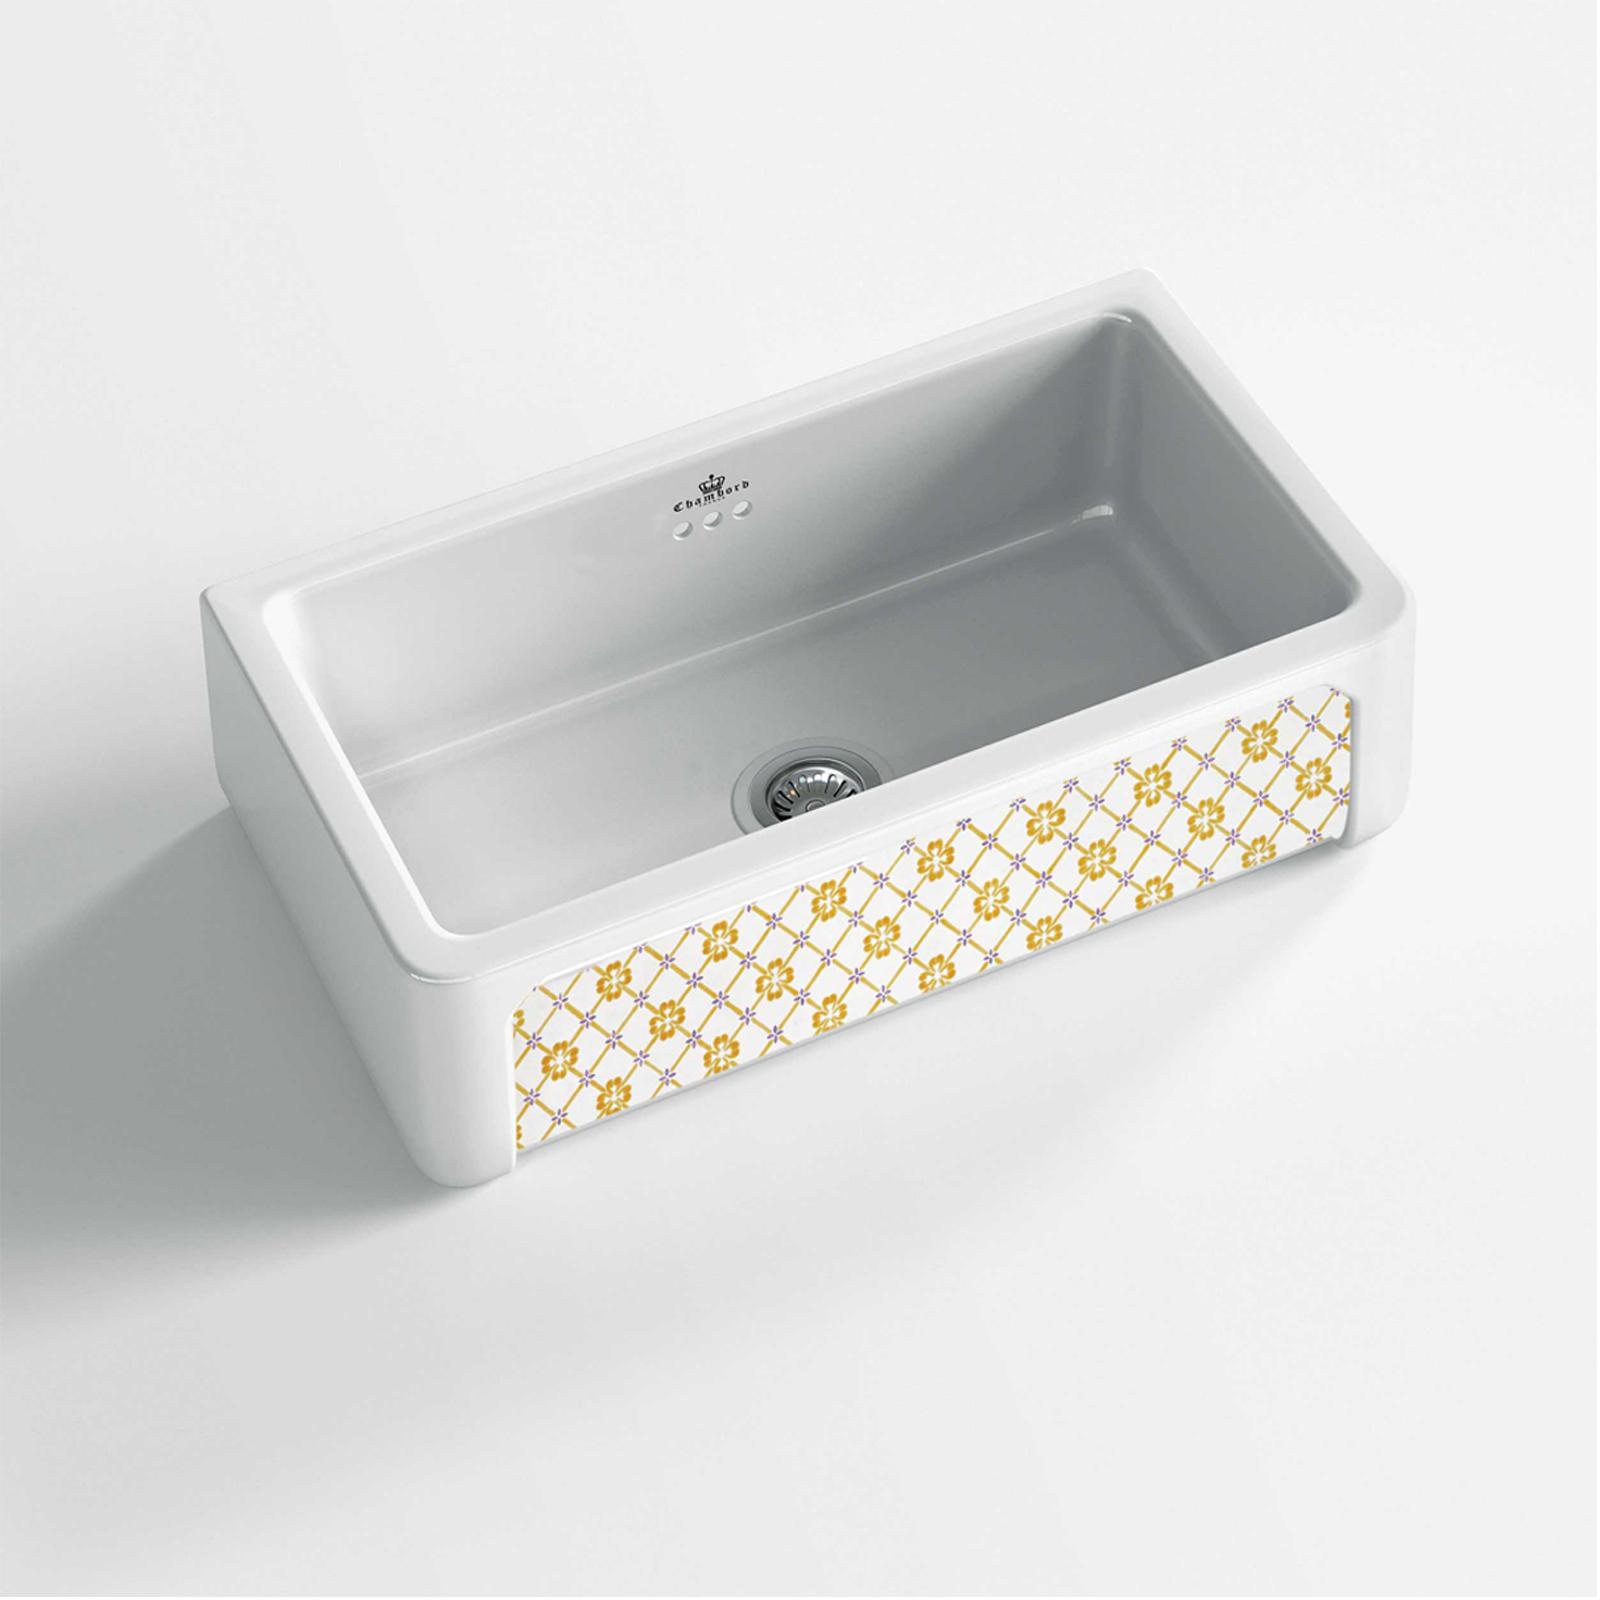 High-quality sink Henri II Provence - single bowl, decorated ceramic